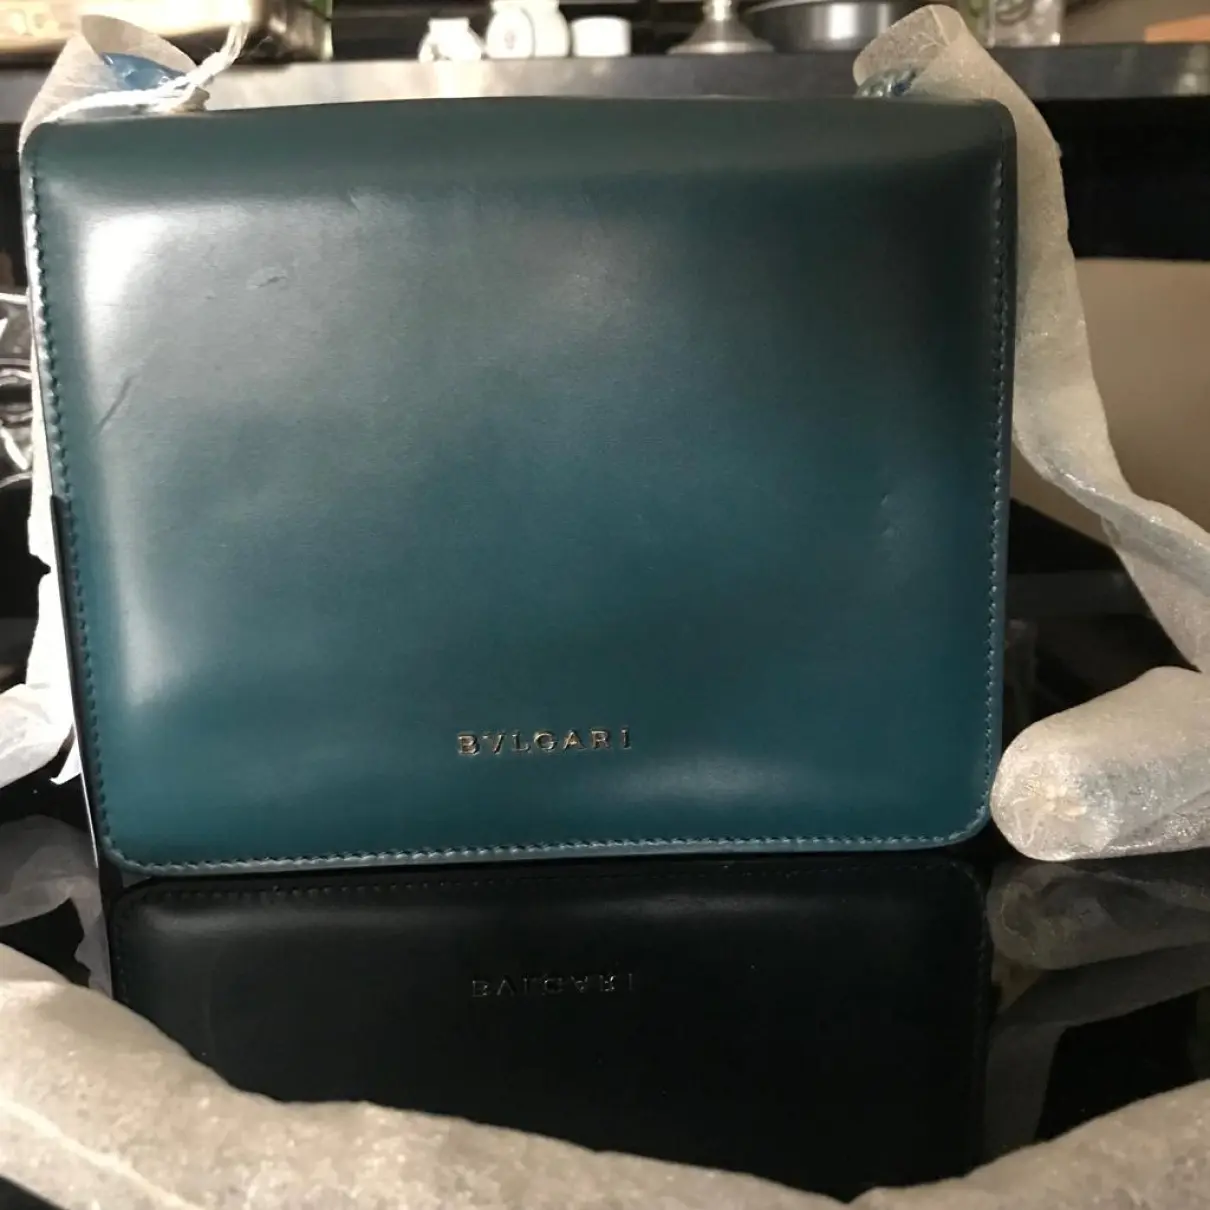 Buy Bvlgari Bulgari leather crossbody bag online